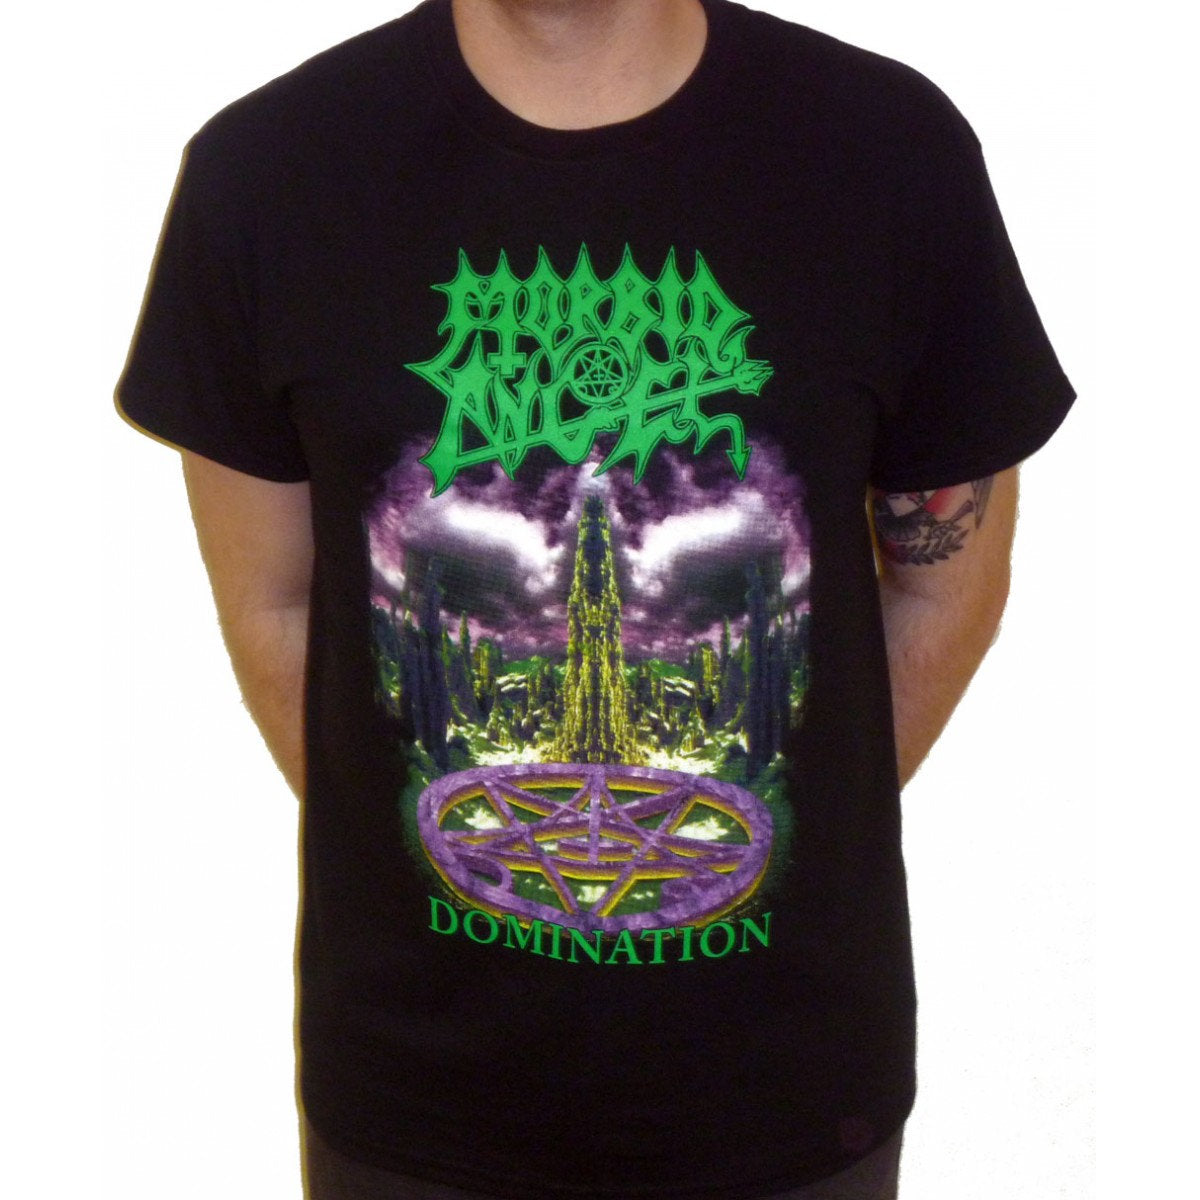 Morbid Angel "Domination" T-shirt